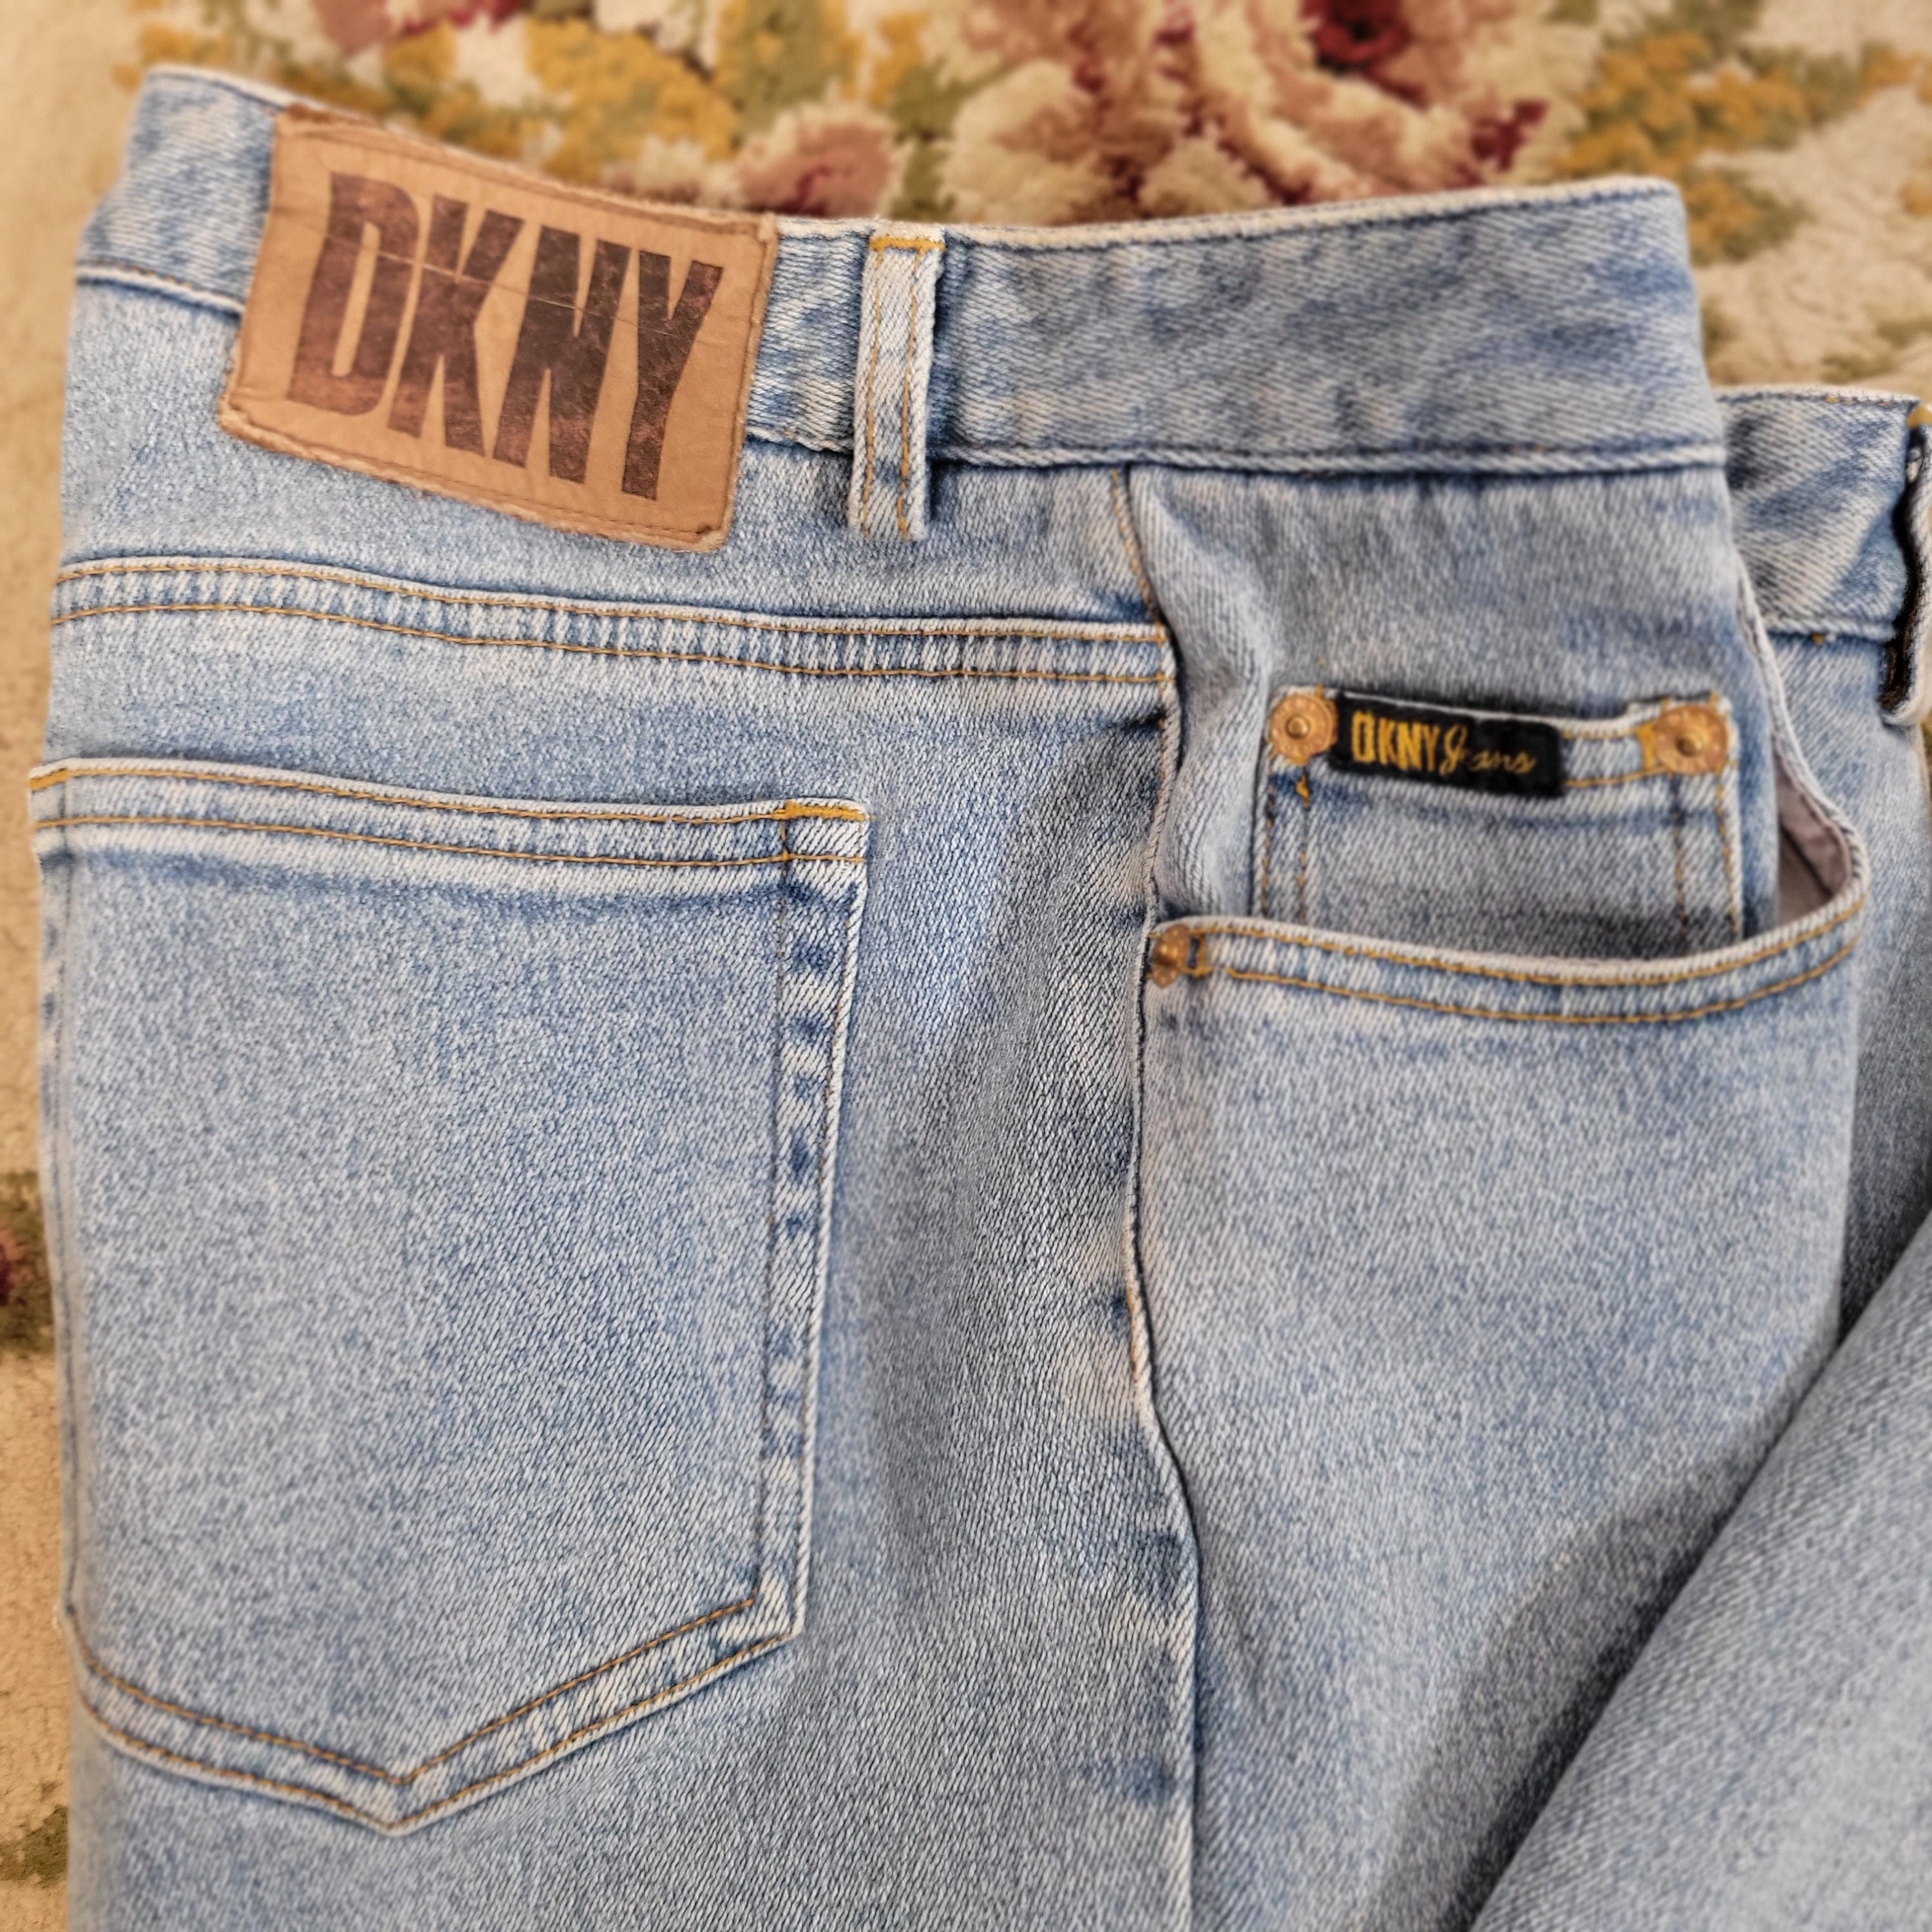 90s DKNY Jeans Denim Size 10 Womens Cotton Spandex High Quality 